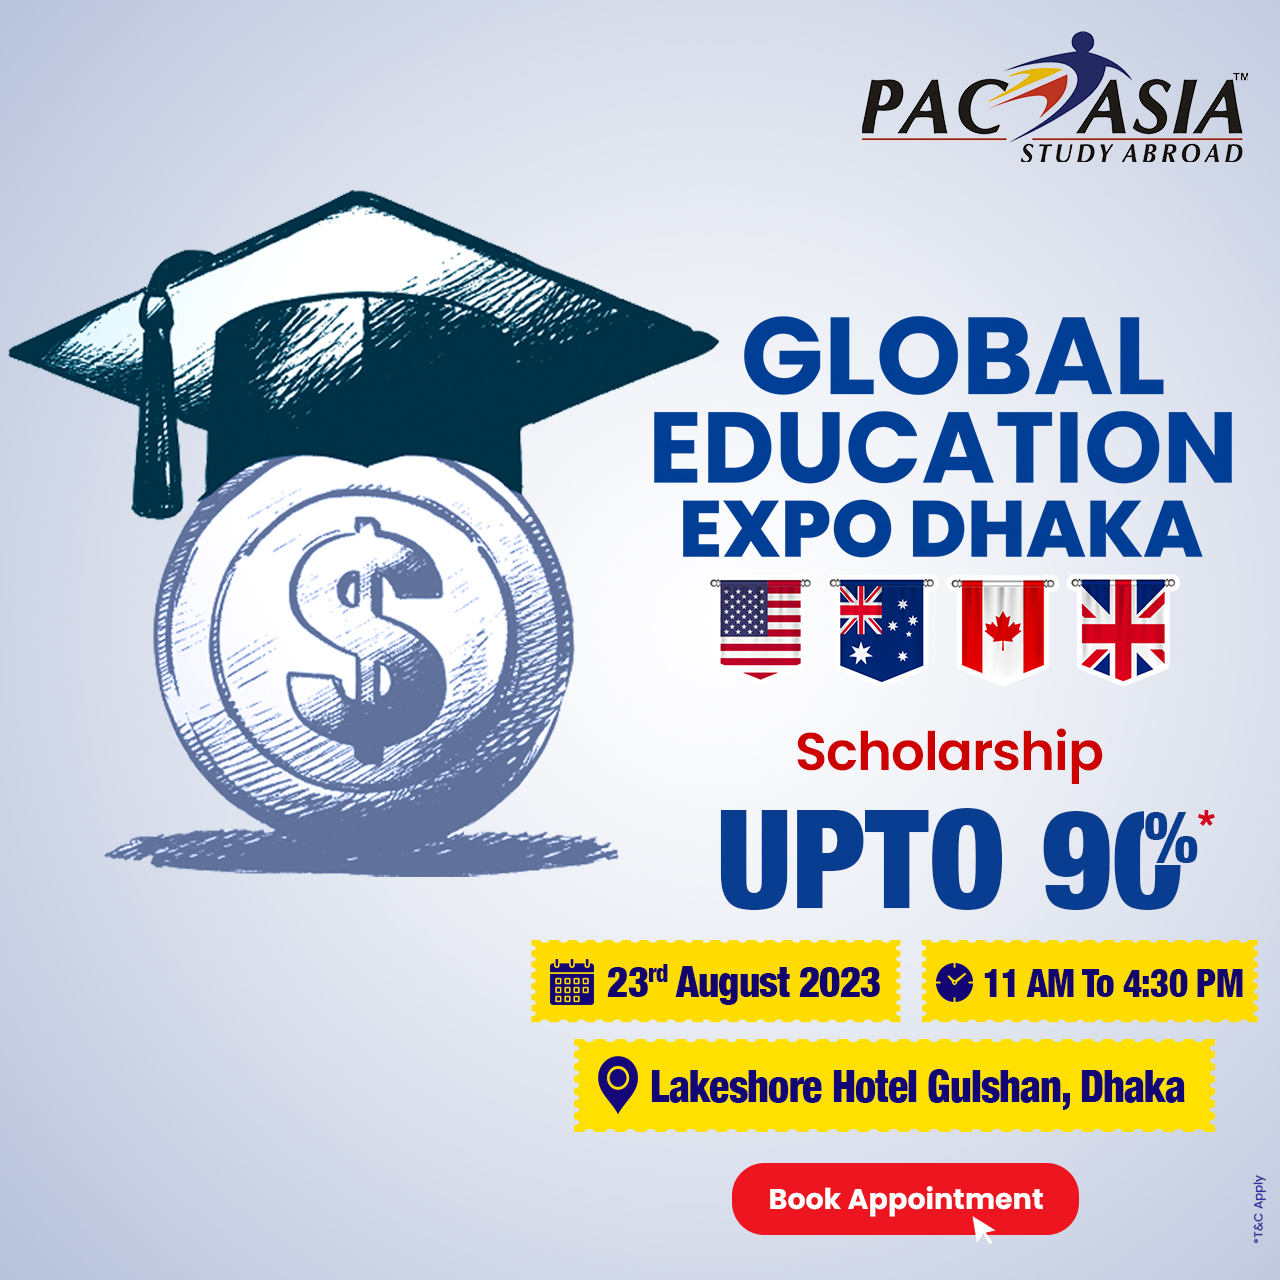 Global Education Expo | Education Fair 2023 | Education Expo Dhaka | Study Abroad, Dhaka, Bangladesh